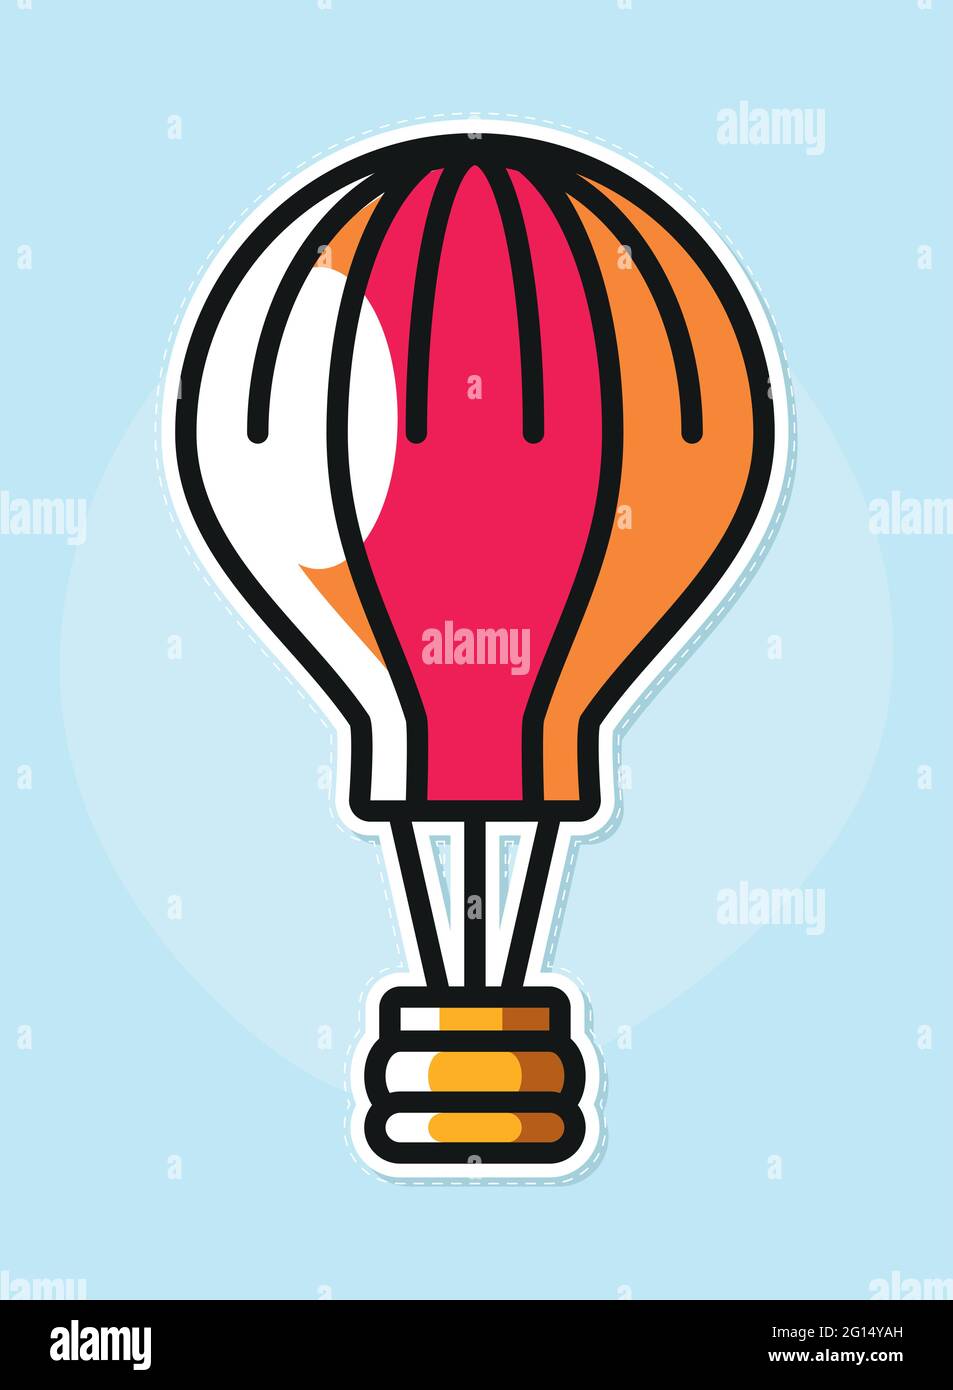 dibujos animados de globos aerostáticos Imagen Vector de stock - Alamy